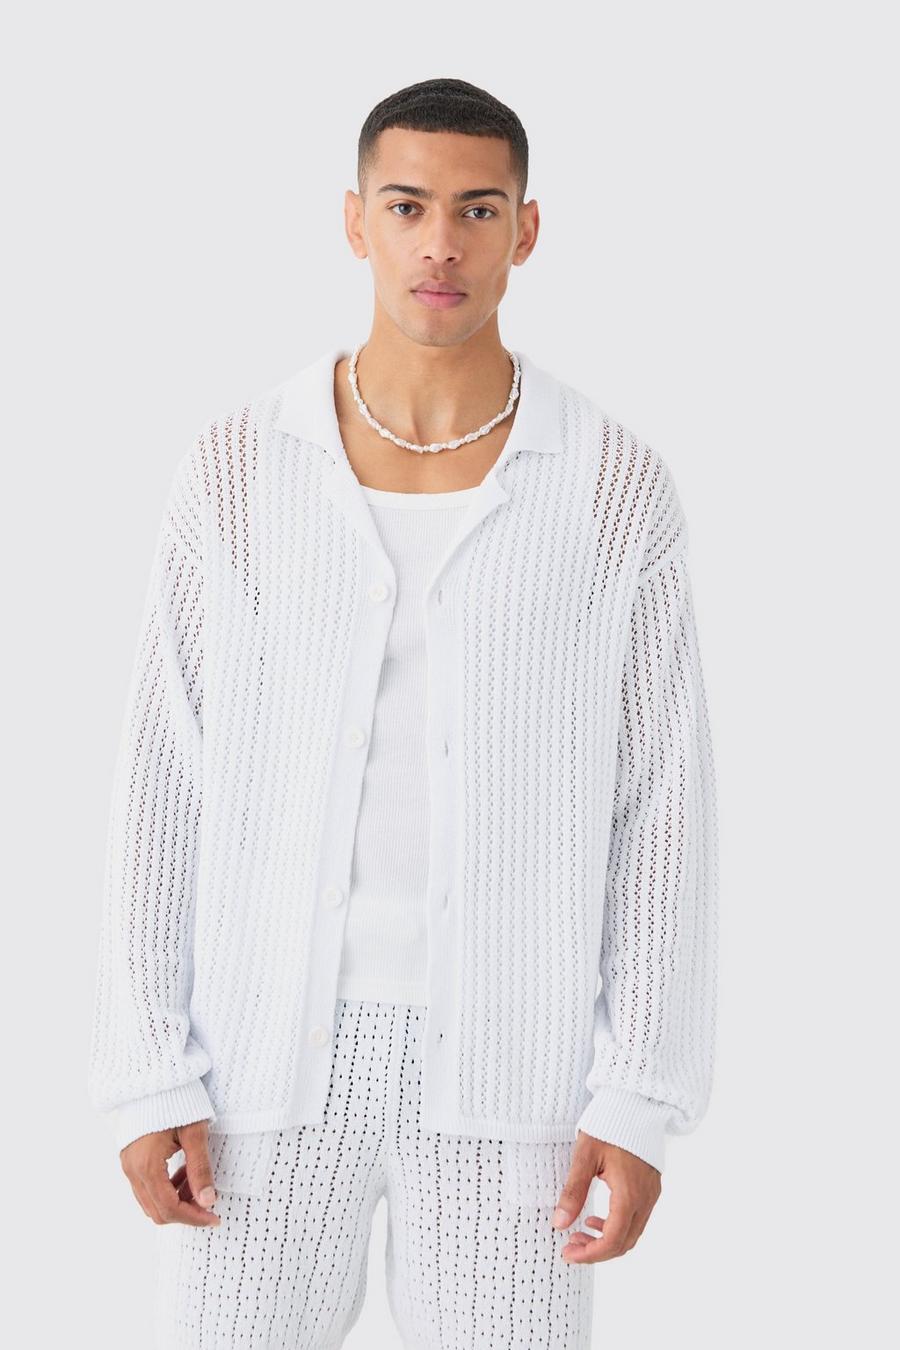 Relaxed Crochet Open Knit Long Sleeve Shirt In White